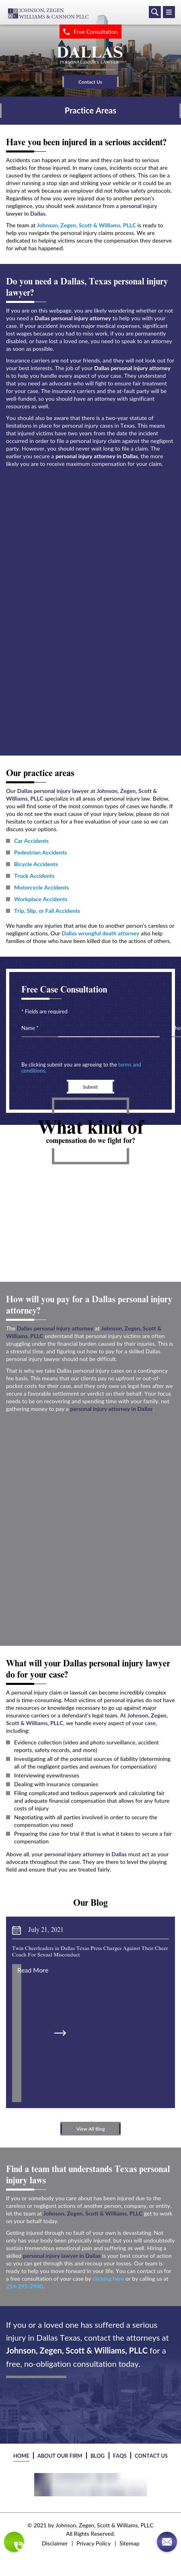 Johnson, Zegen, Scott & Williams, PLLC - Dallas TX Lawyers